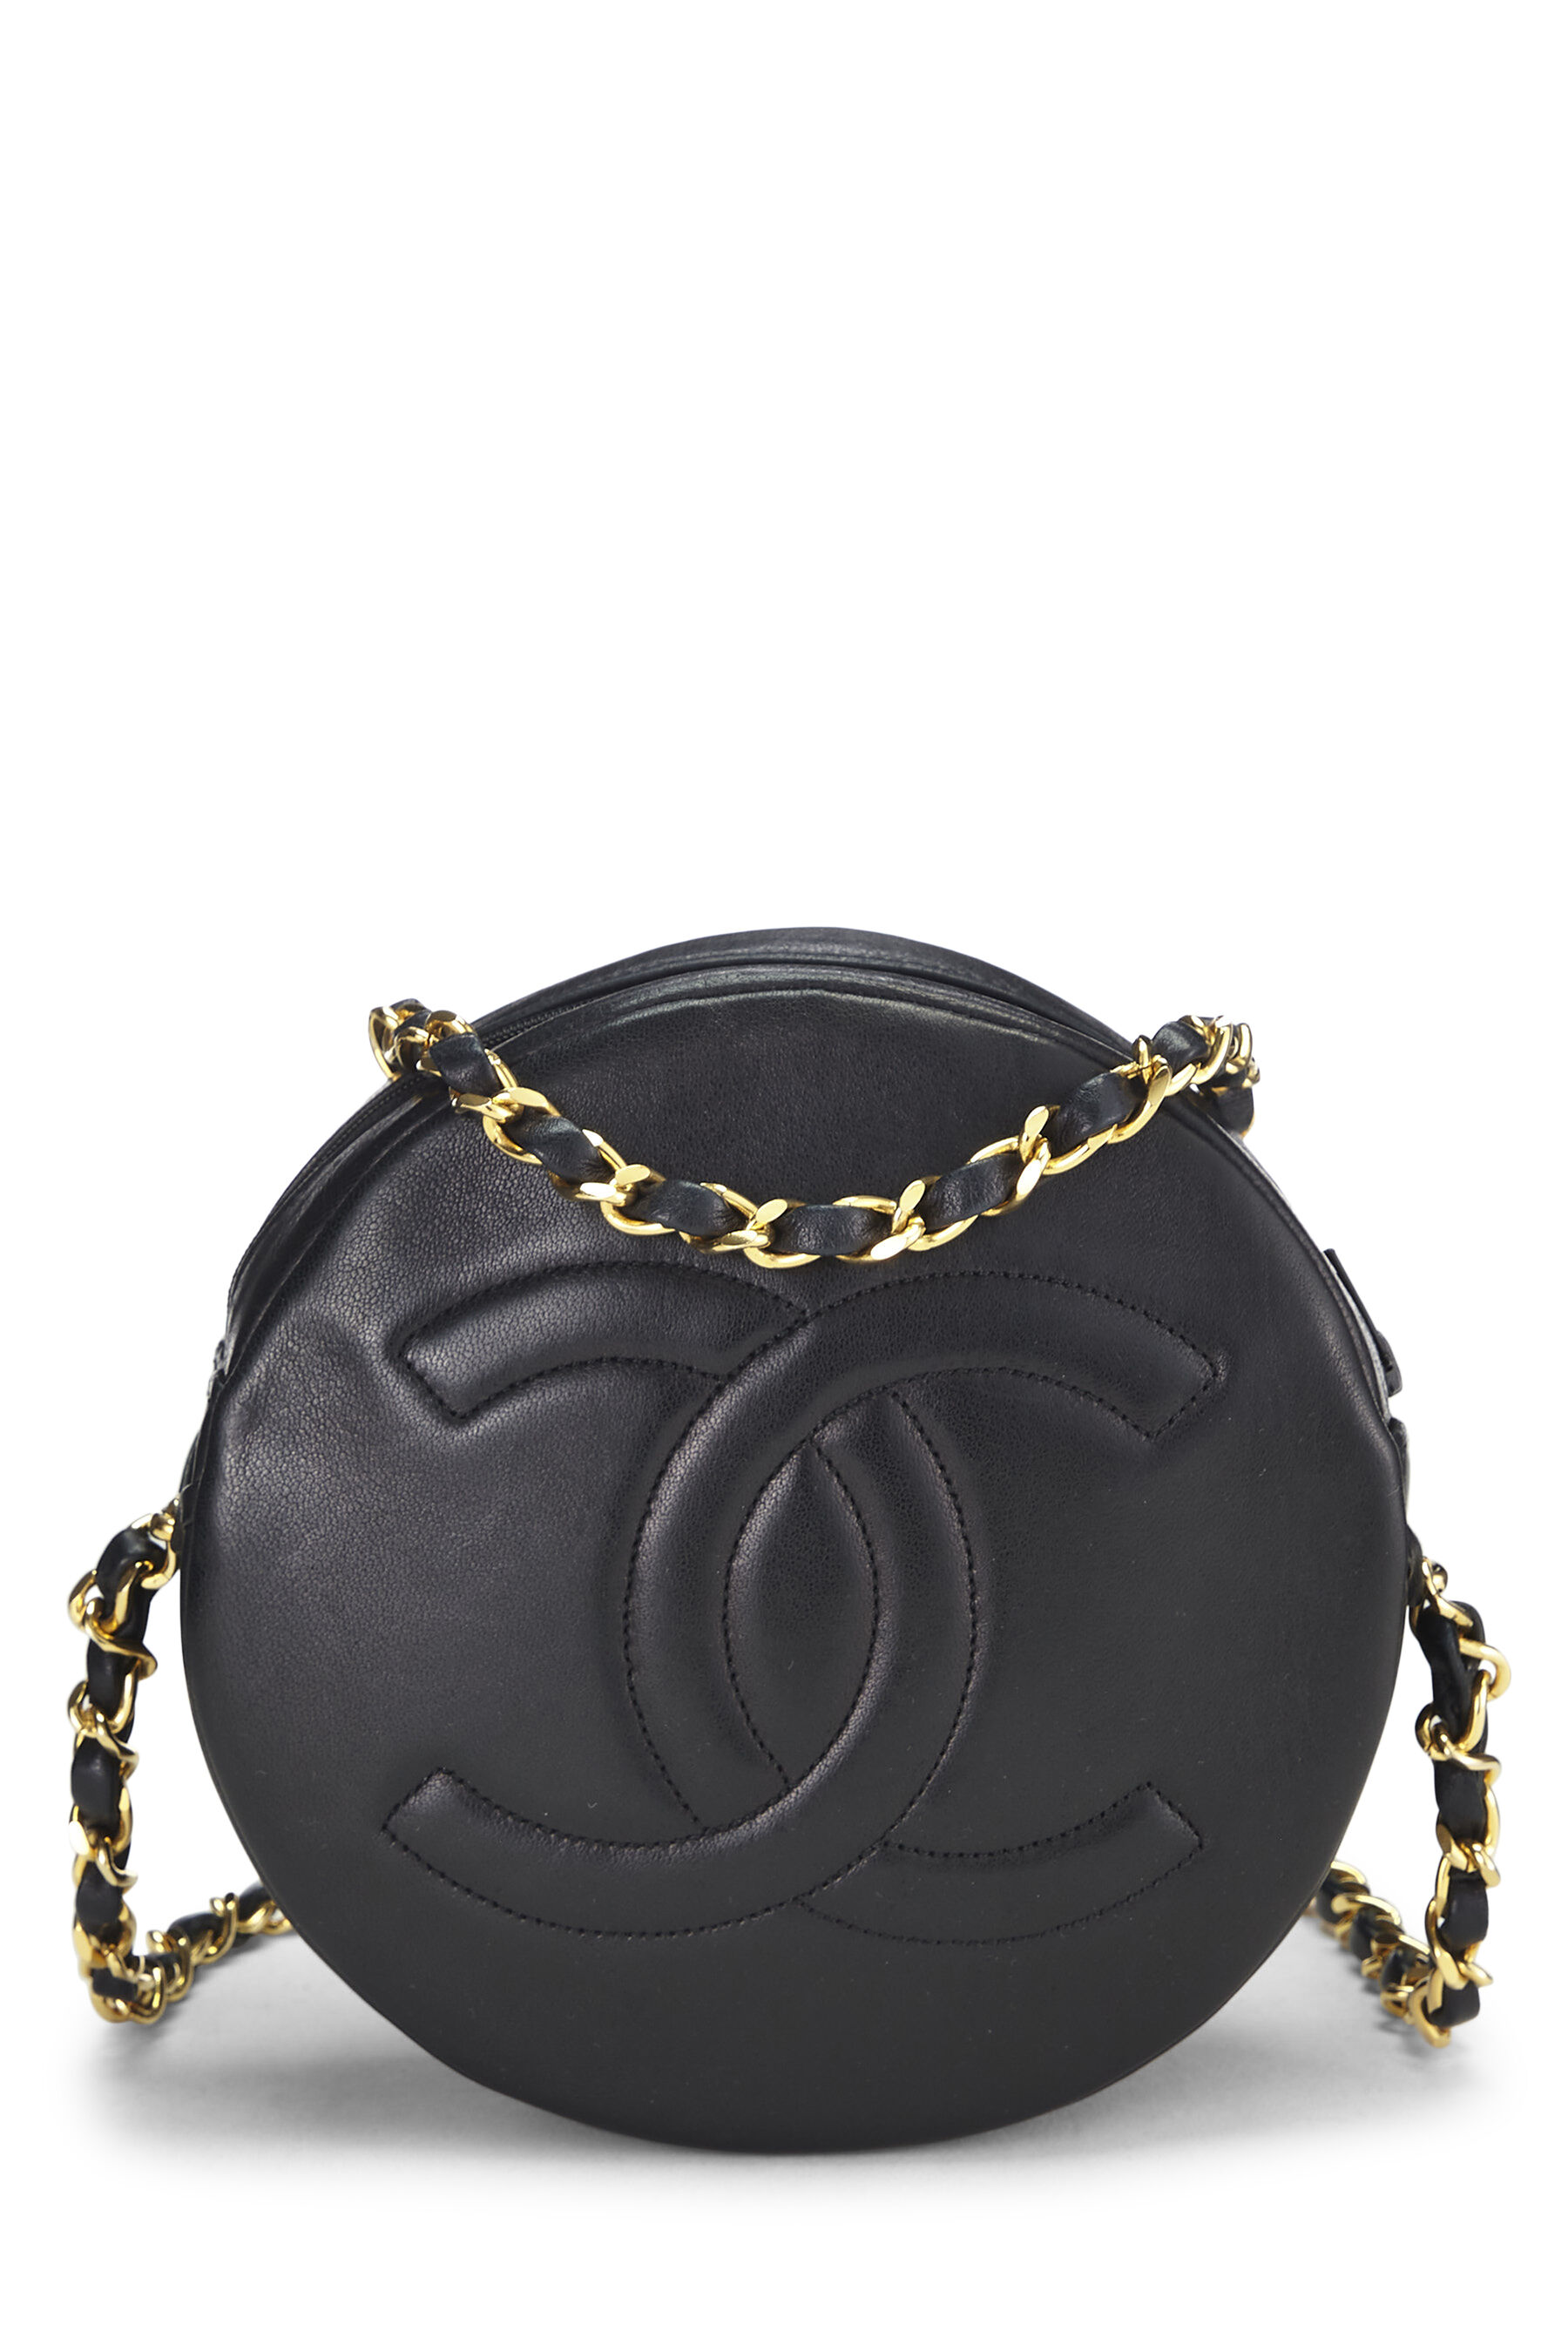 Chanel - Black Lambskin Round Shoulder Bag Mini